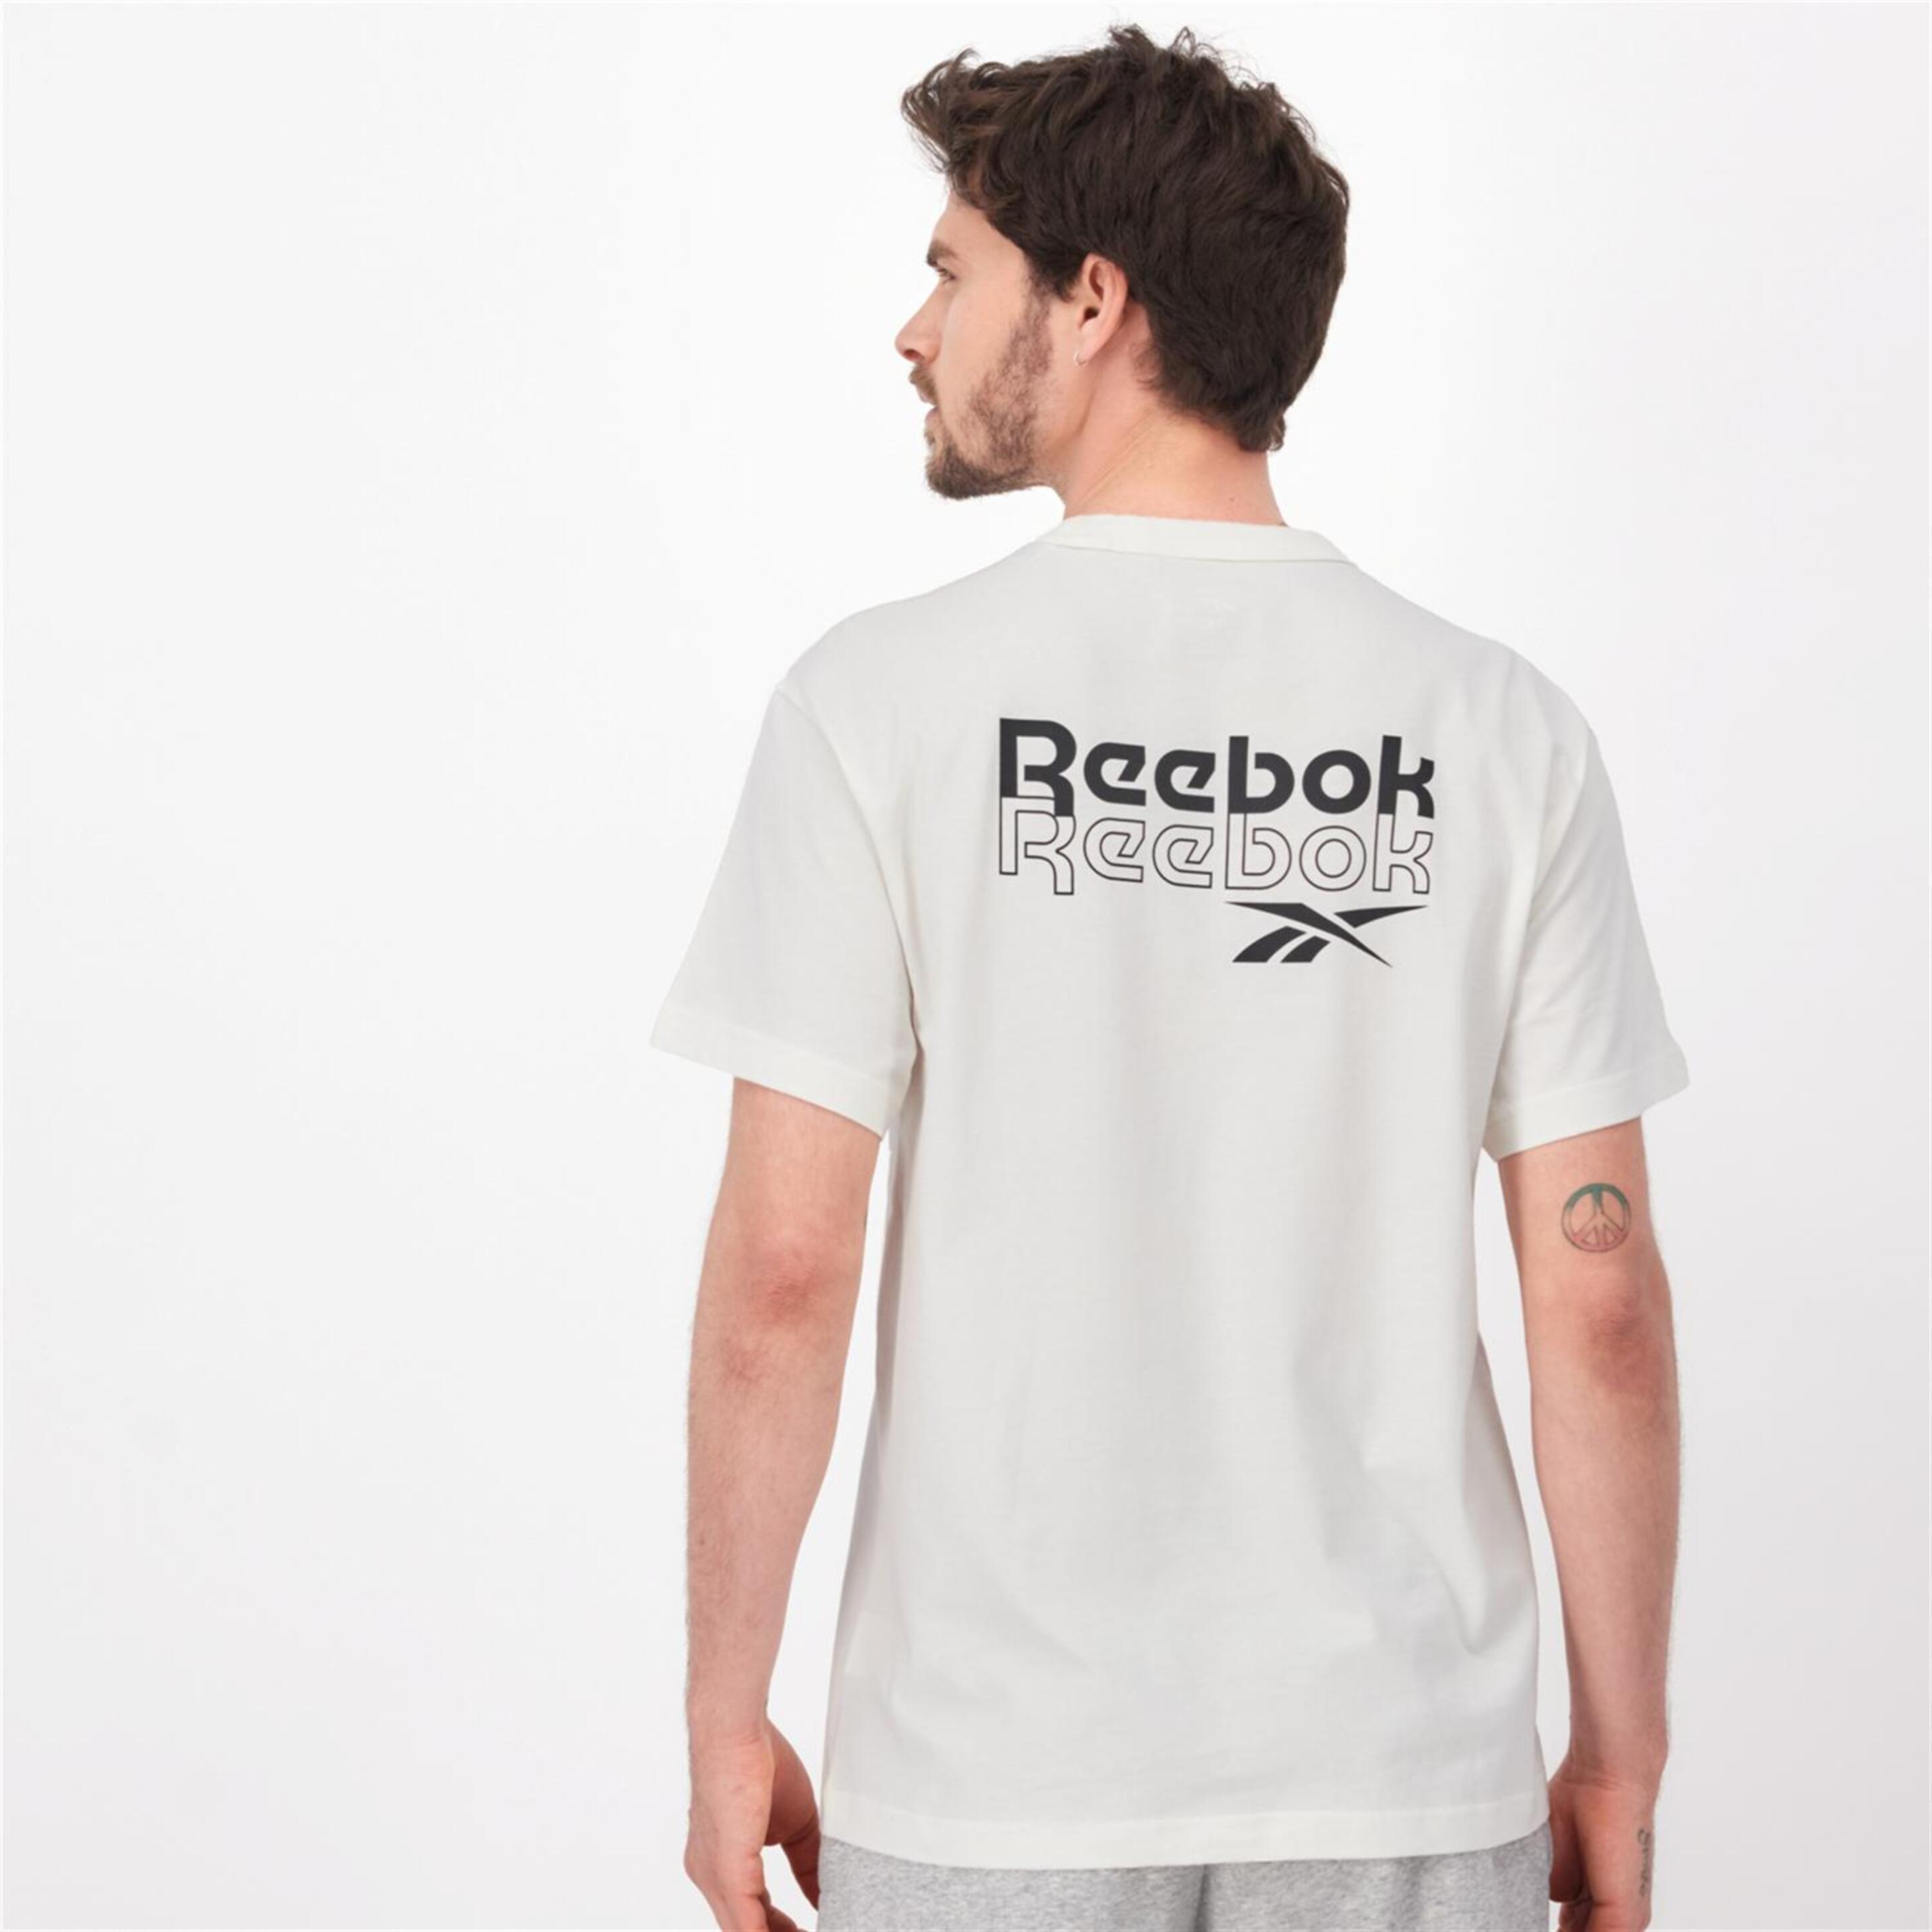 Reebok Ri - Blanco - Camiseta Hombre